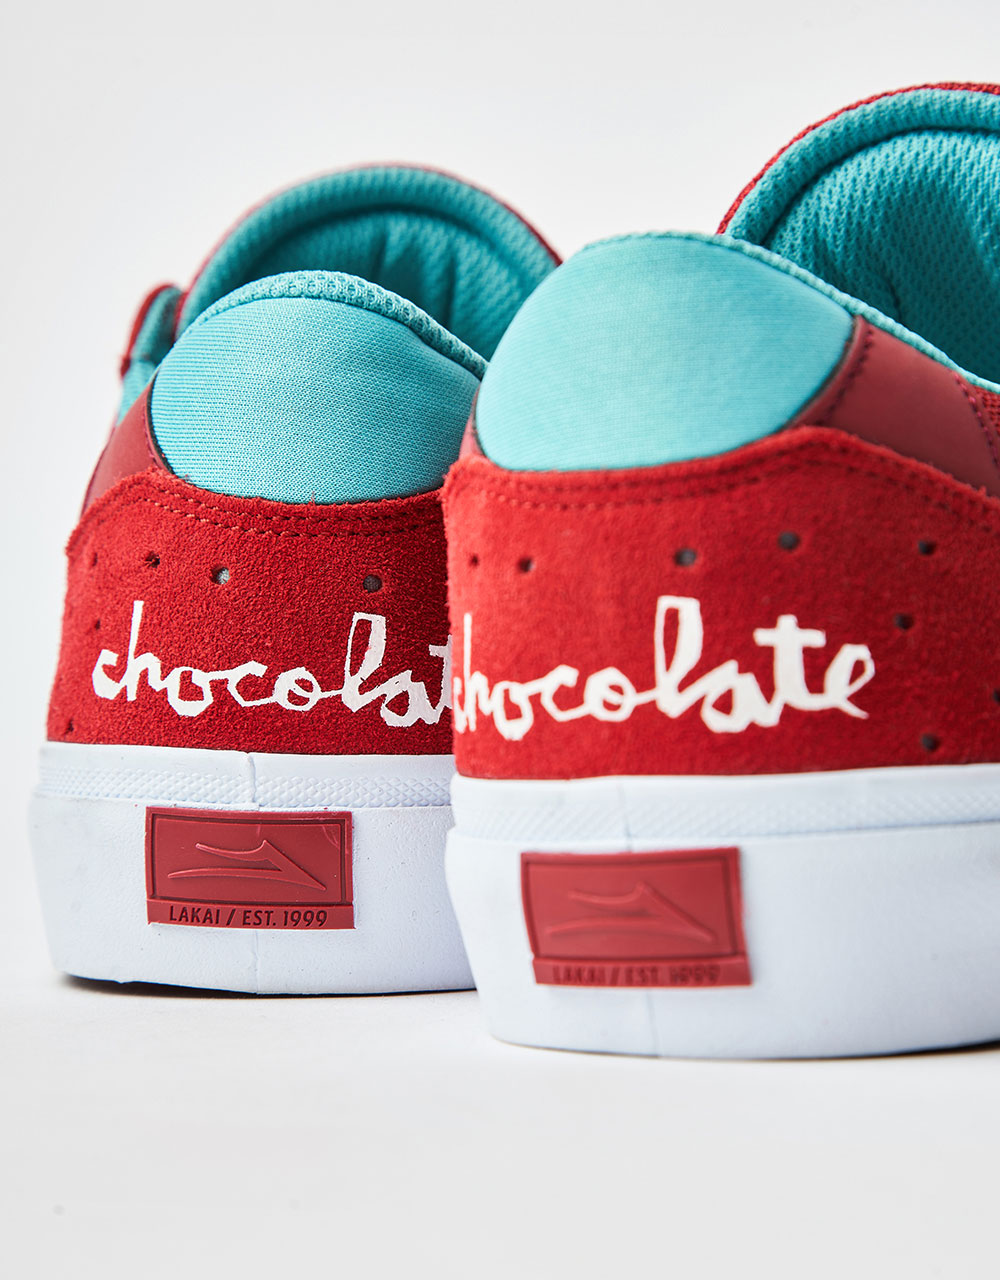 Lakai x Chocolate Atlantic Vulc Skate Shoes - Red Suede